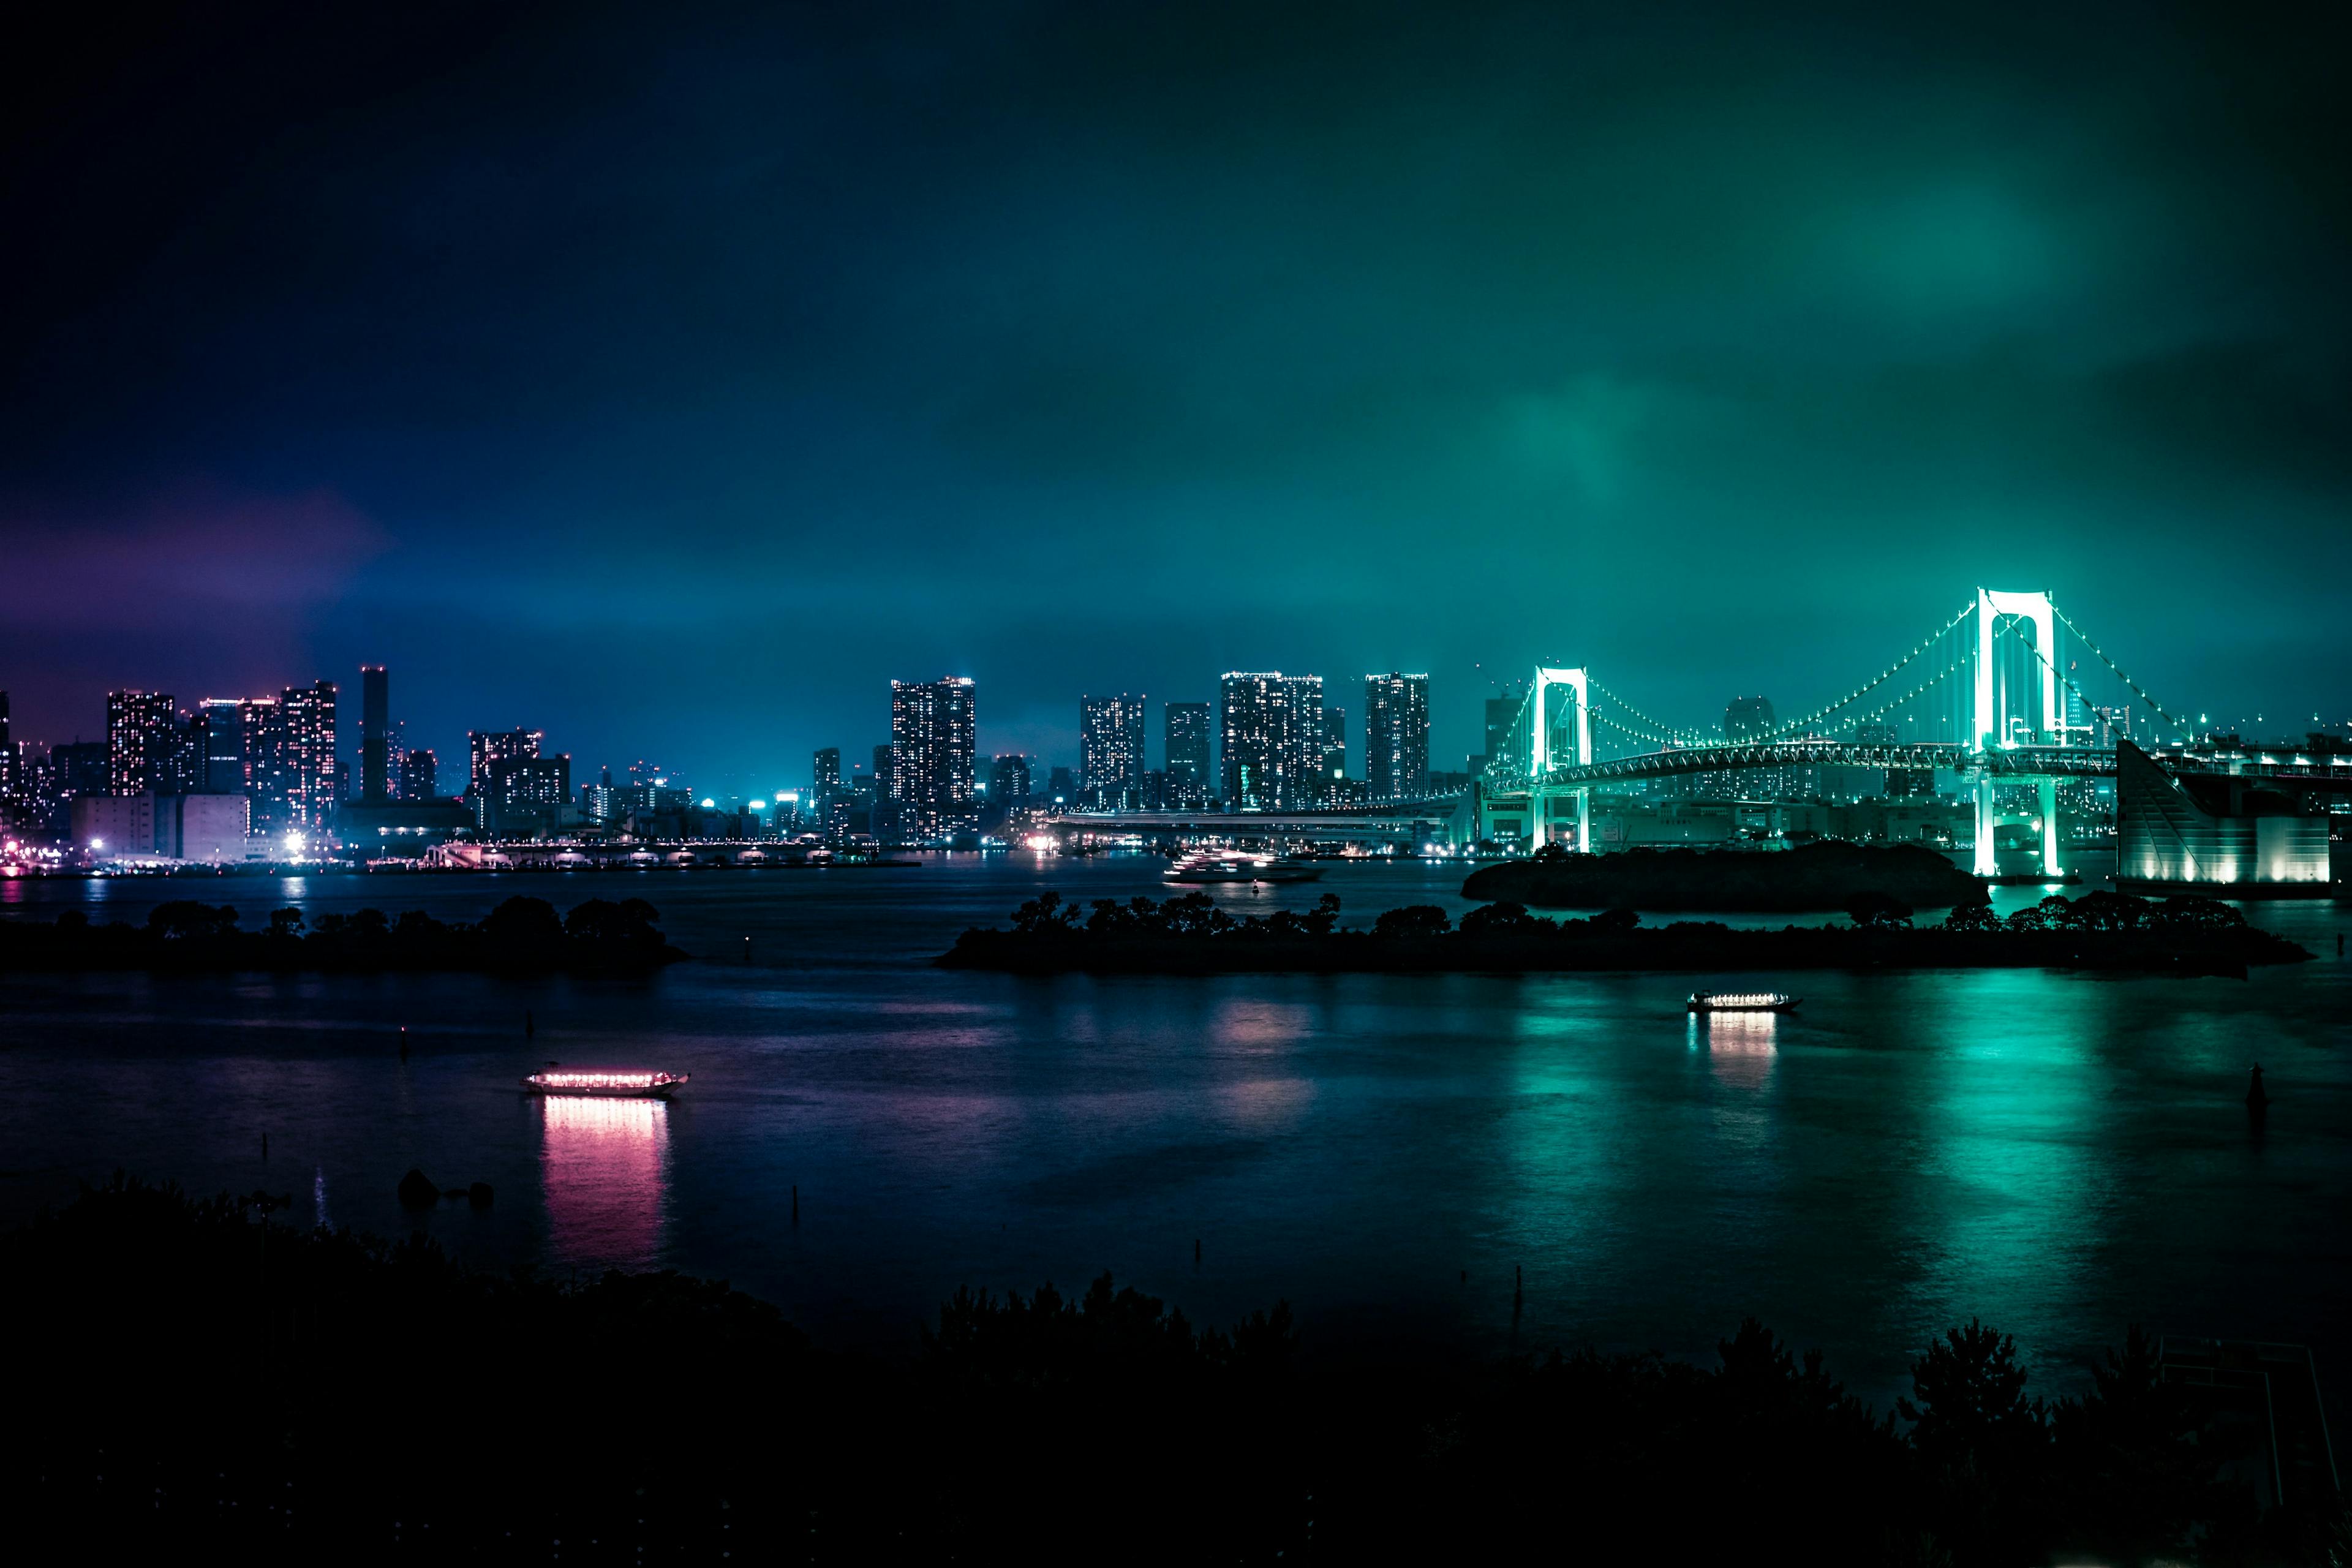 A landscape image of the Tokyo bay's skyline